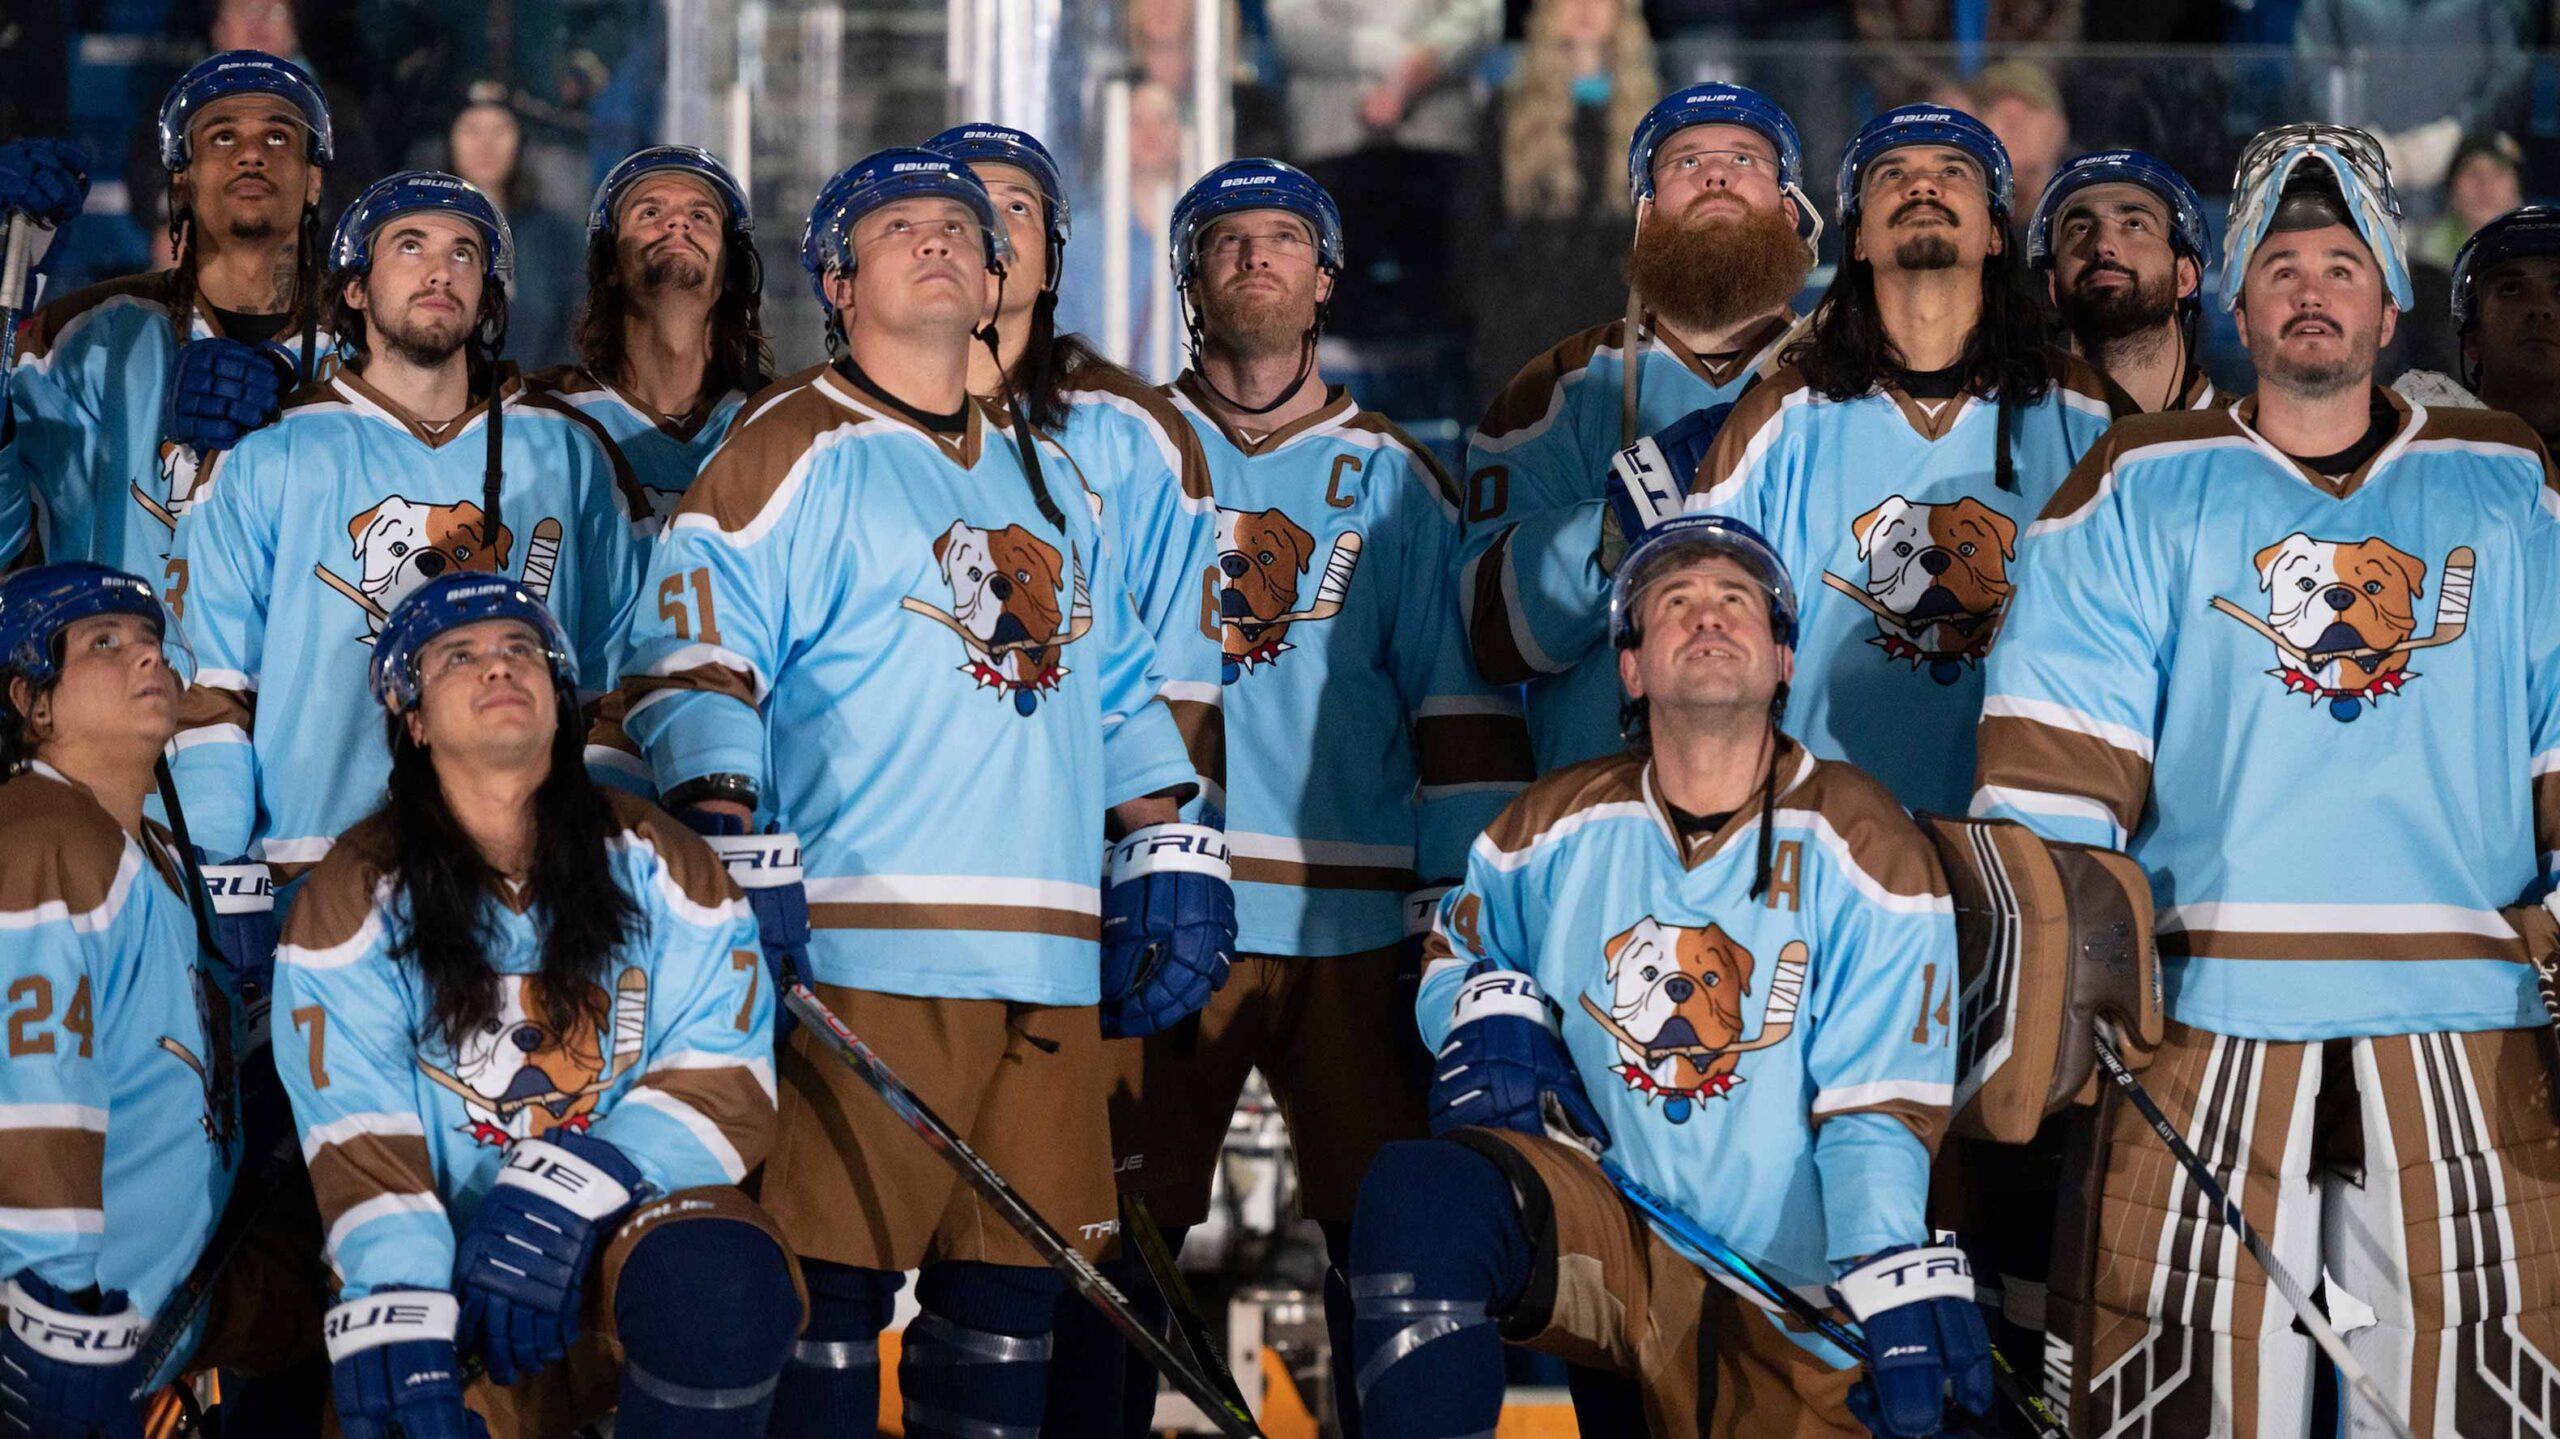 The Sudbury Blueberry Bulldogs Are Coming To Life This Season